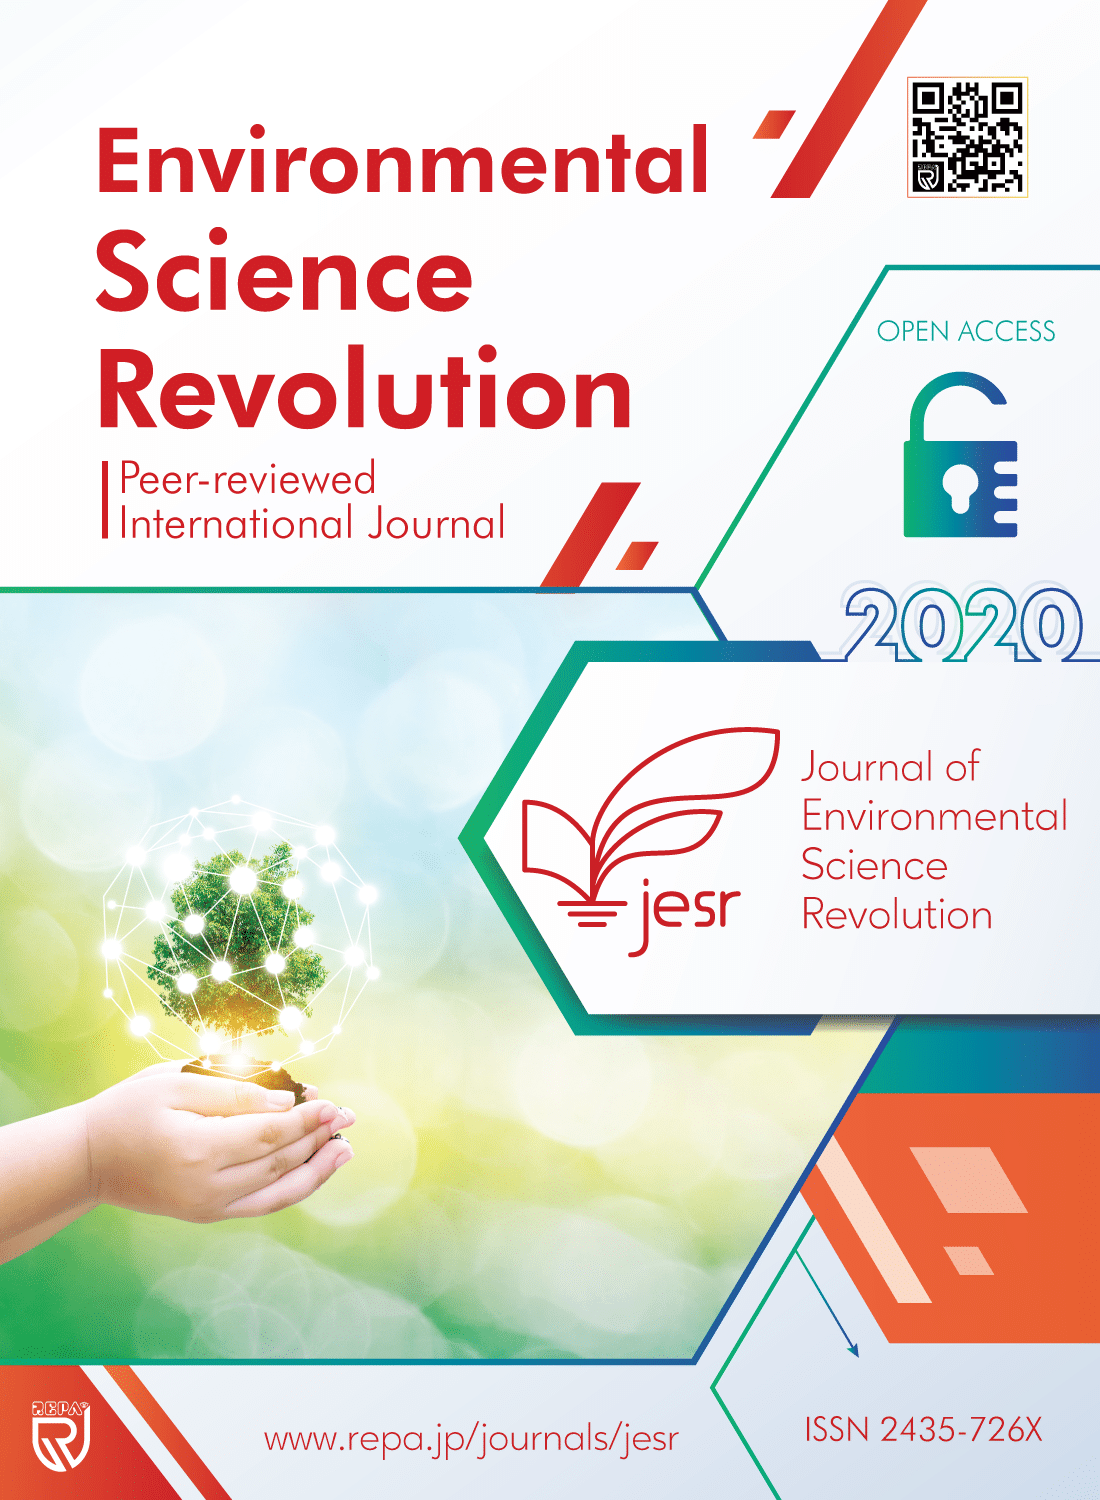 Journal of Environmental Science Revolution - JESR